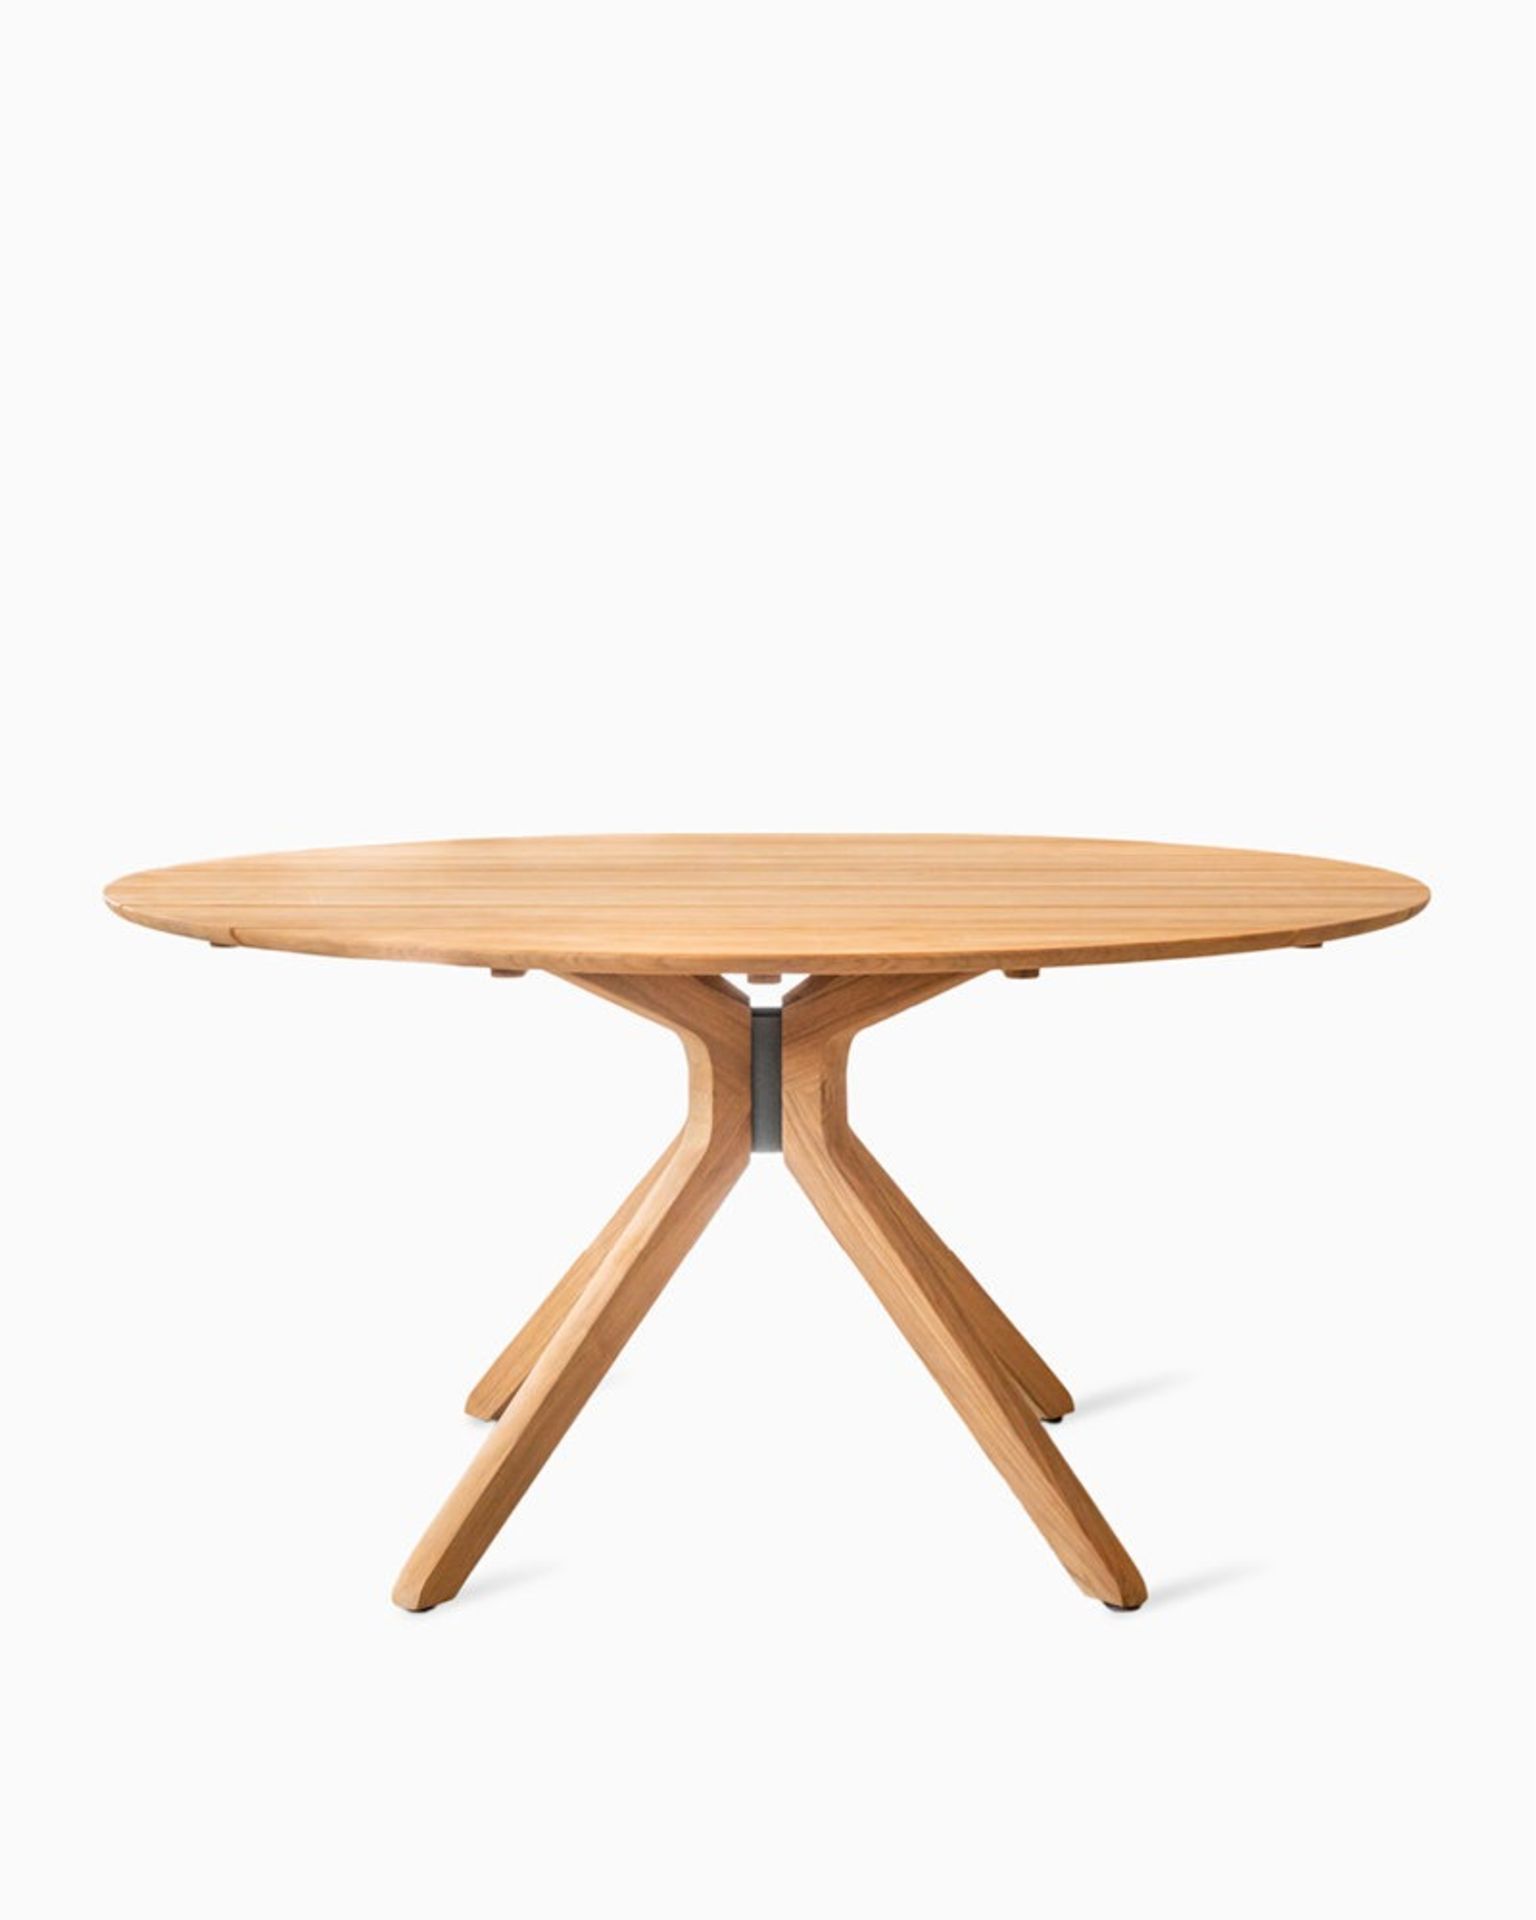 Noa-13 Oak Dining Table 126x93x8.5cm *design may vary* - ER30